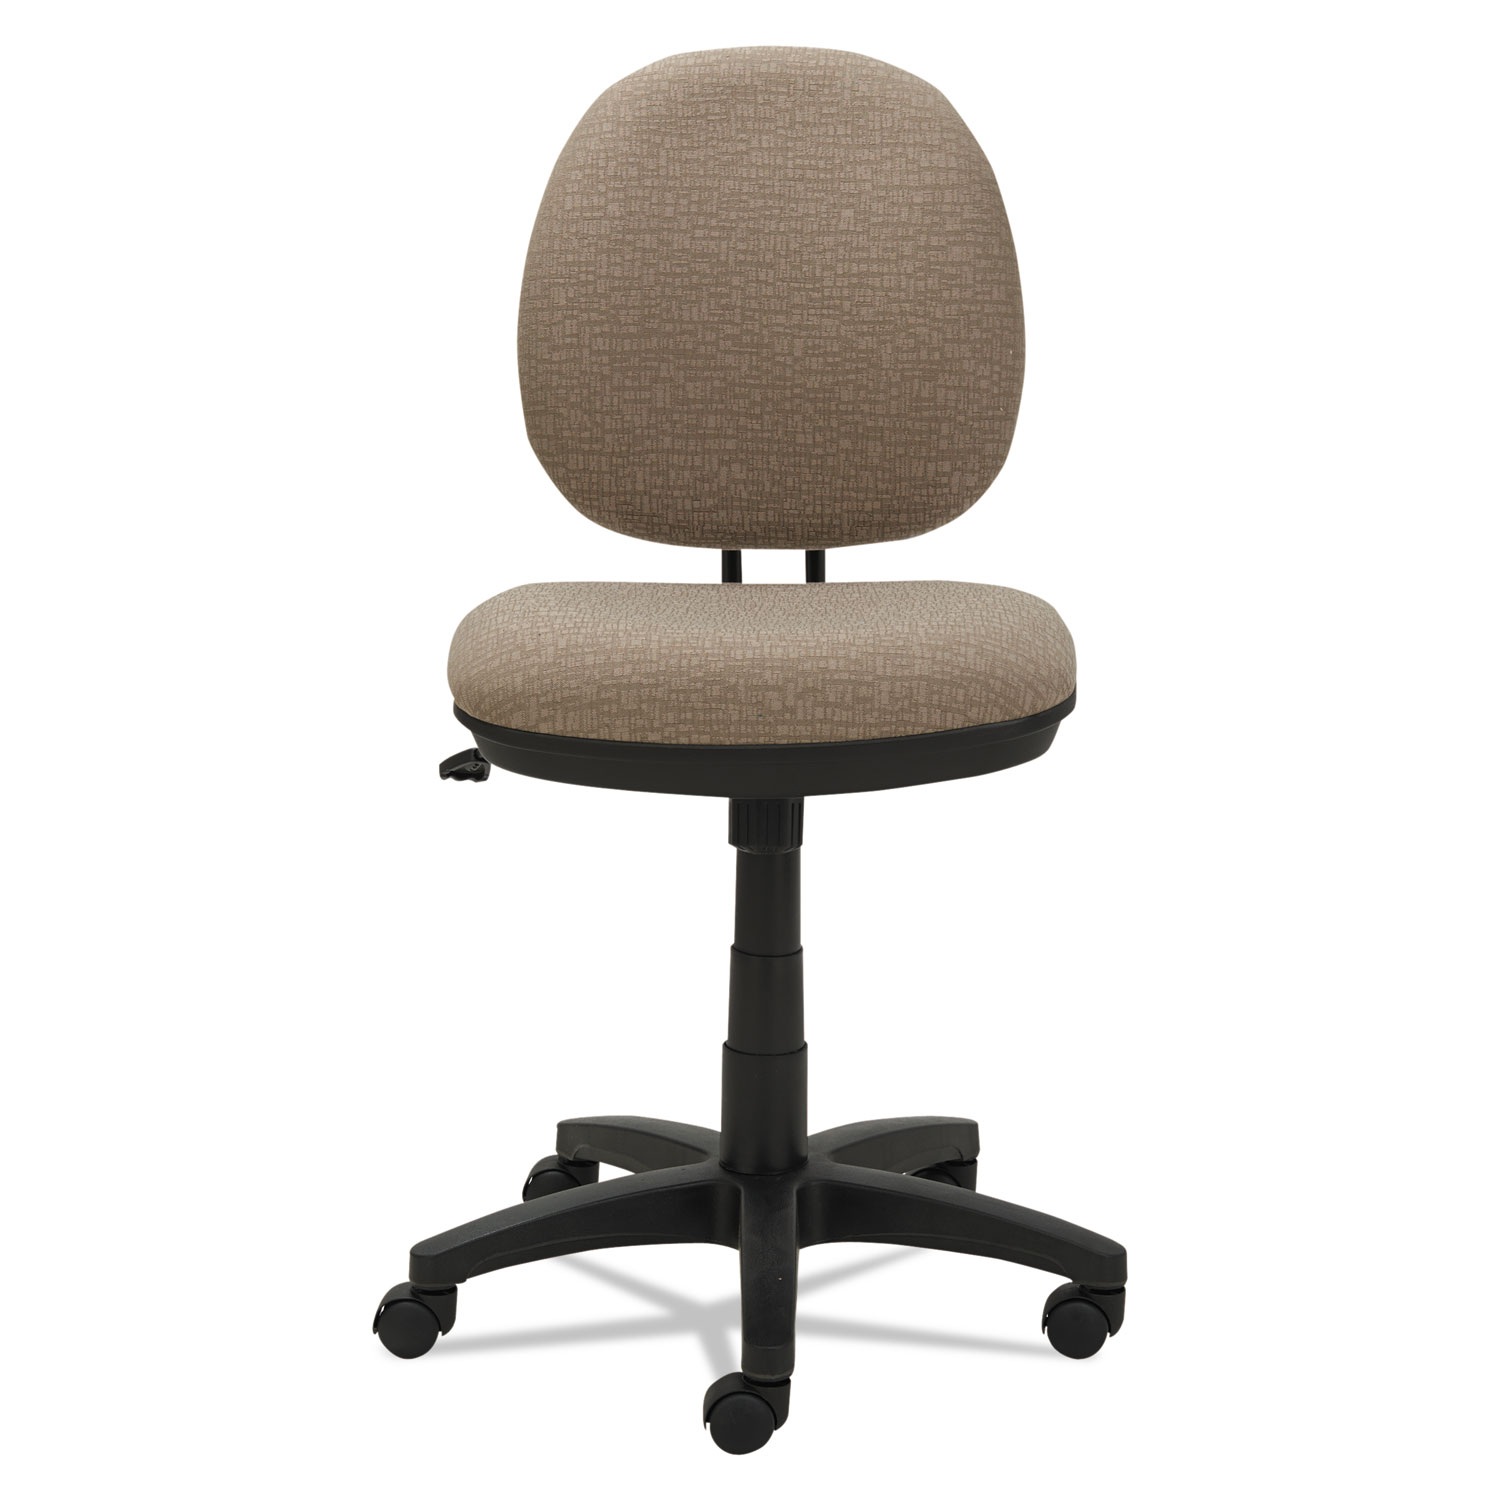 Alera Interval Series Swivel/Tilt Task Chair, Supports up to 275 lbs., Sandstone Tan Seat/Sandstone Tan Back, Black Base